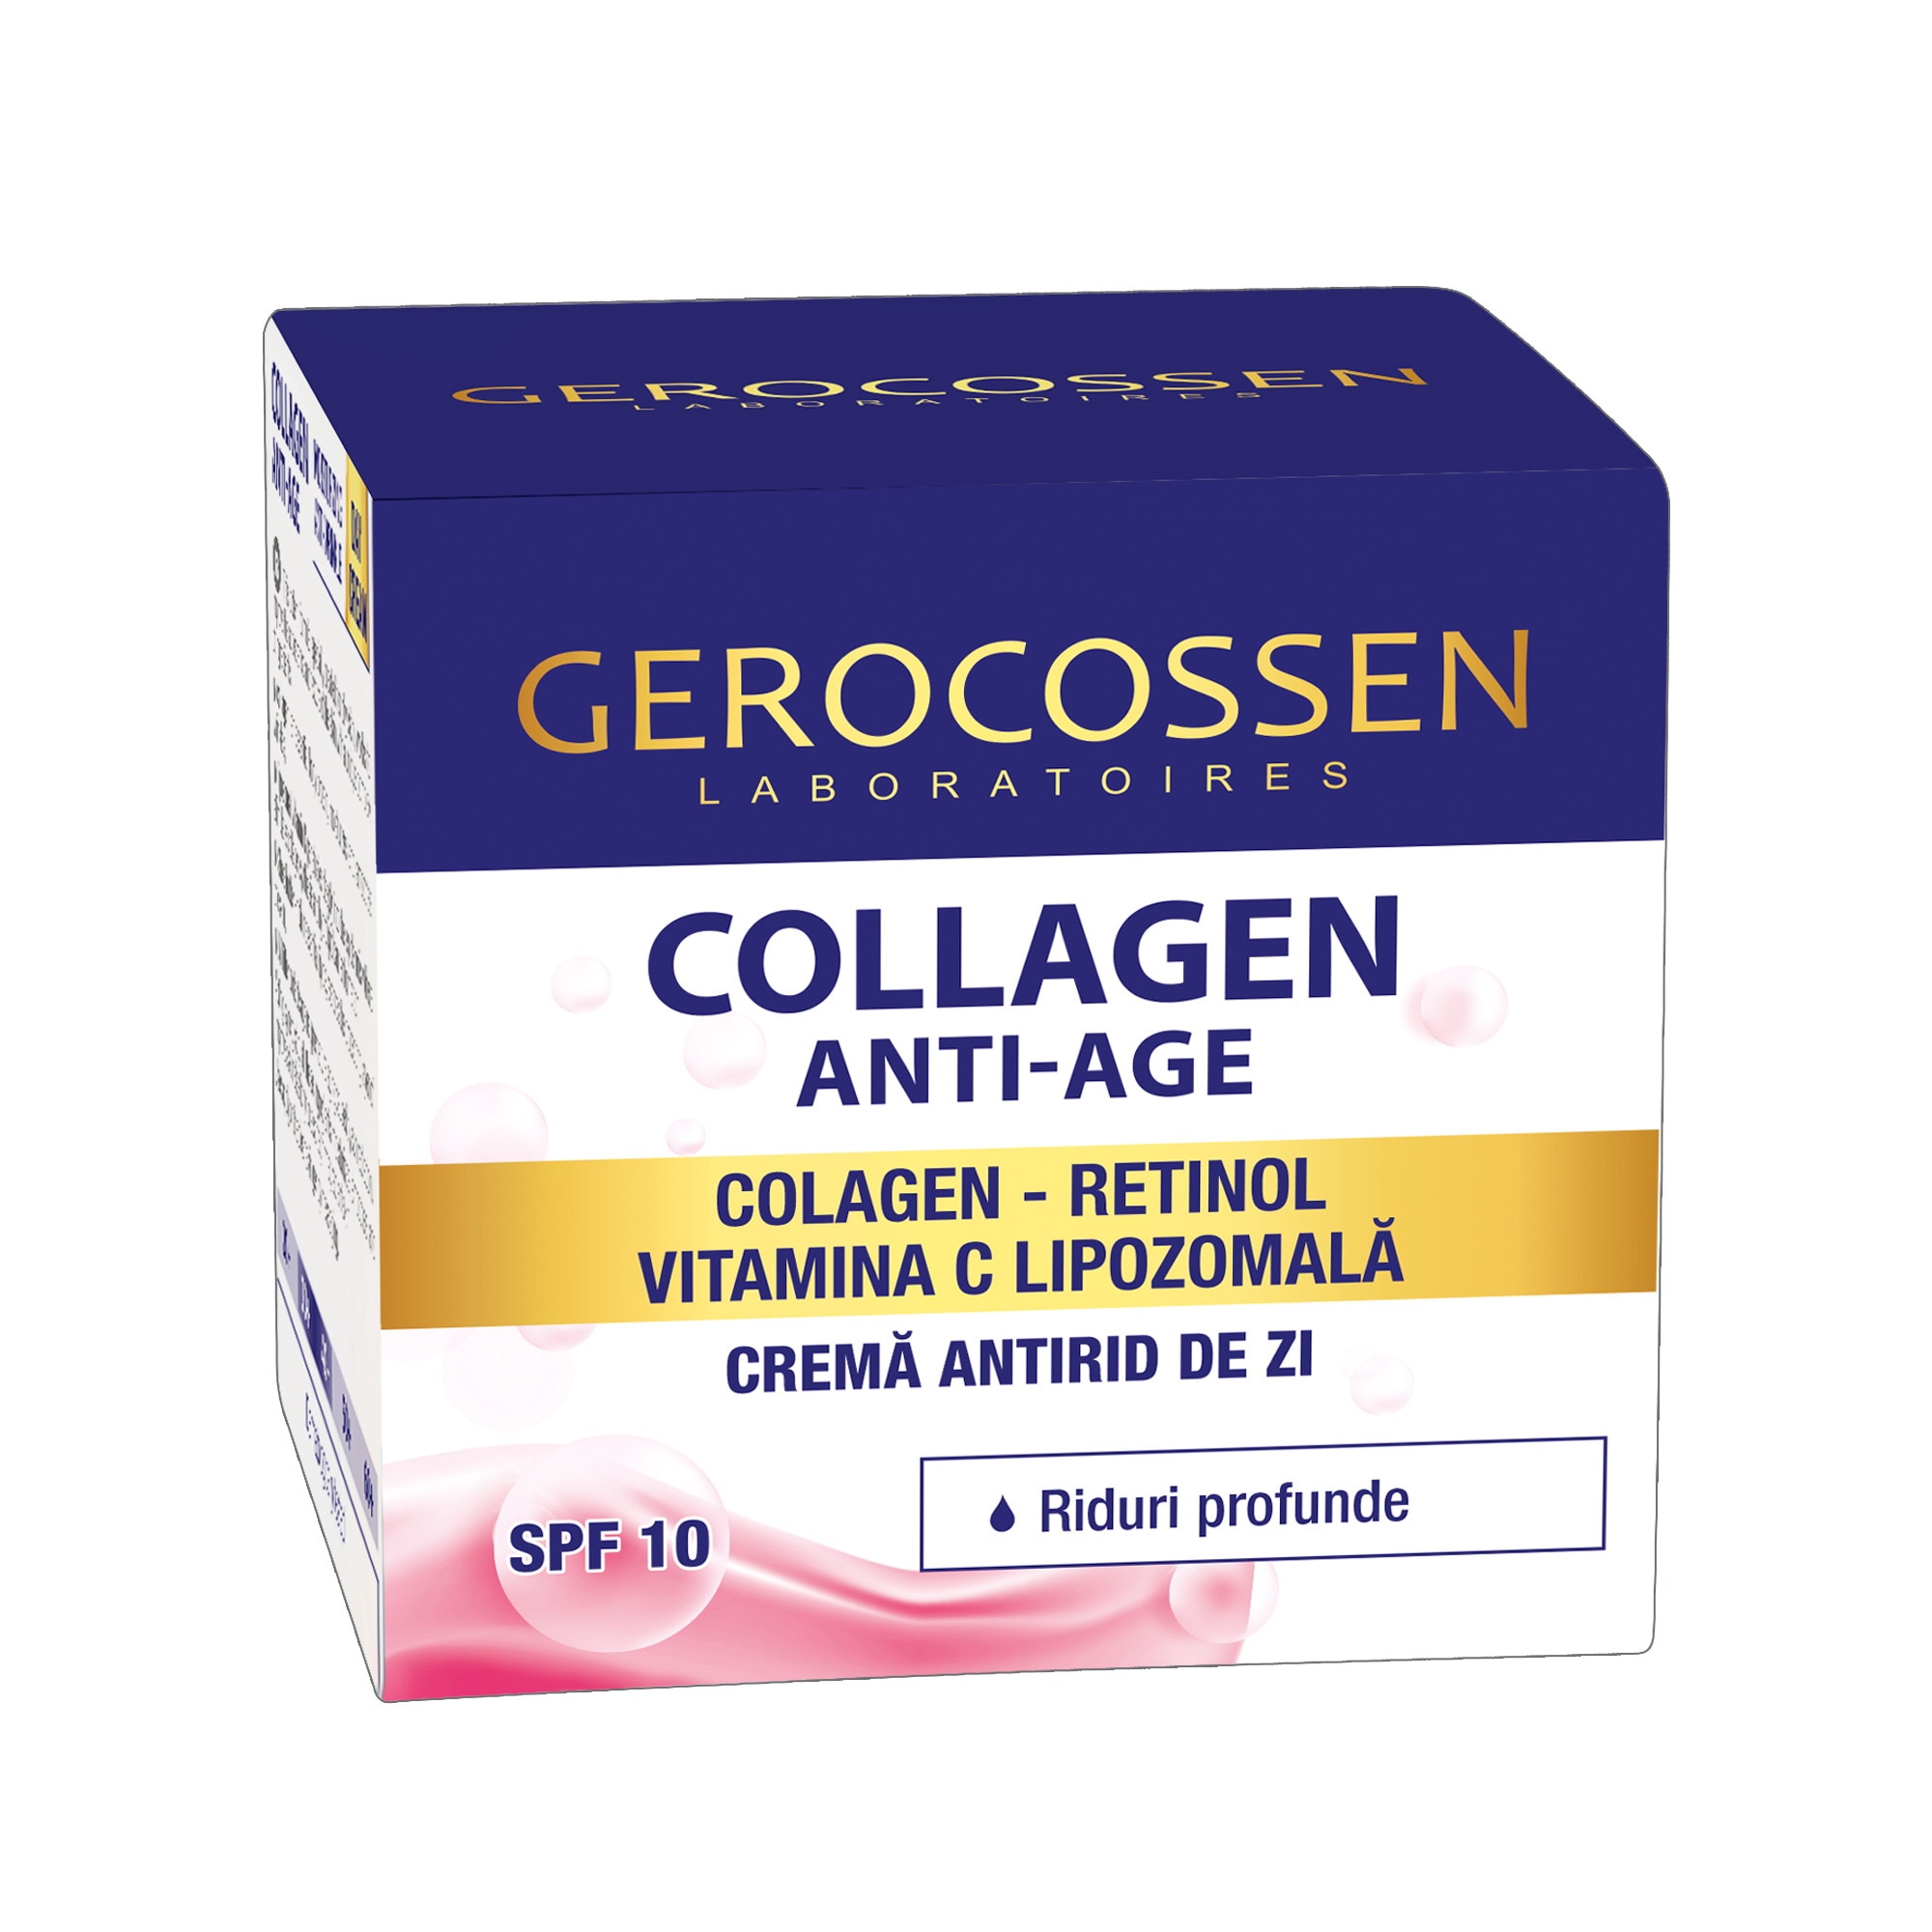 Crema zi antirid riduri profunde spf10 Collagen AntiAge 50ml - Gerocossen, pret 32,4 lei - Planteea